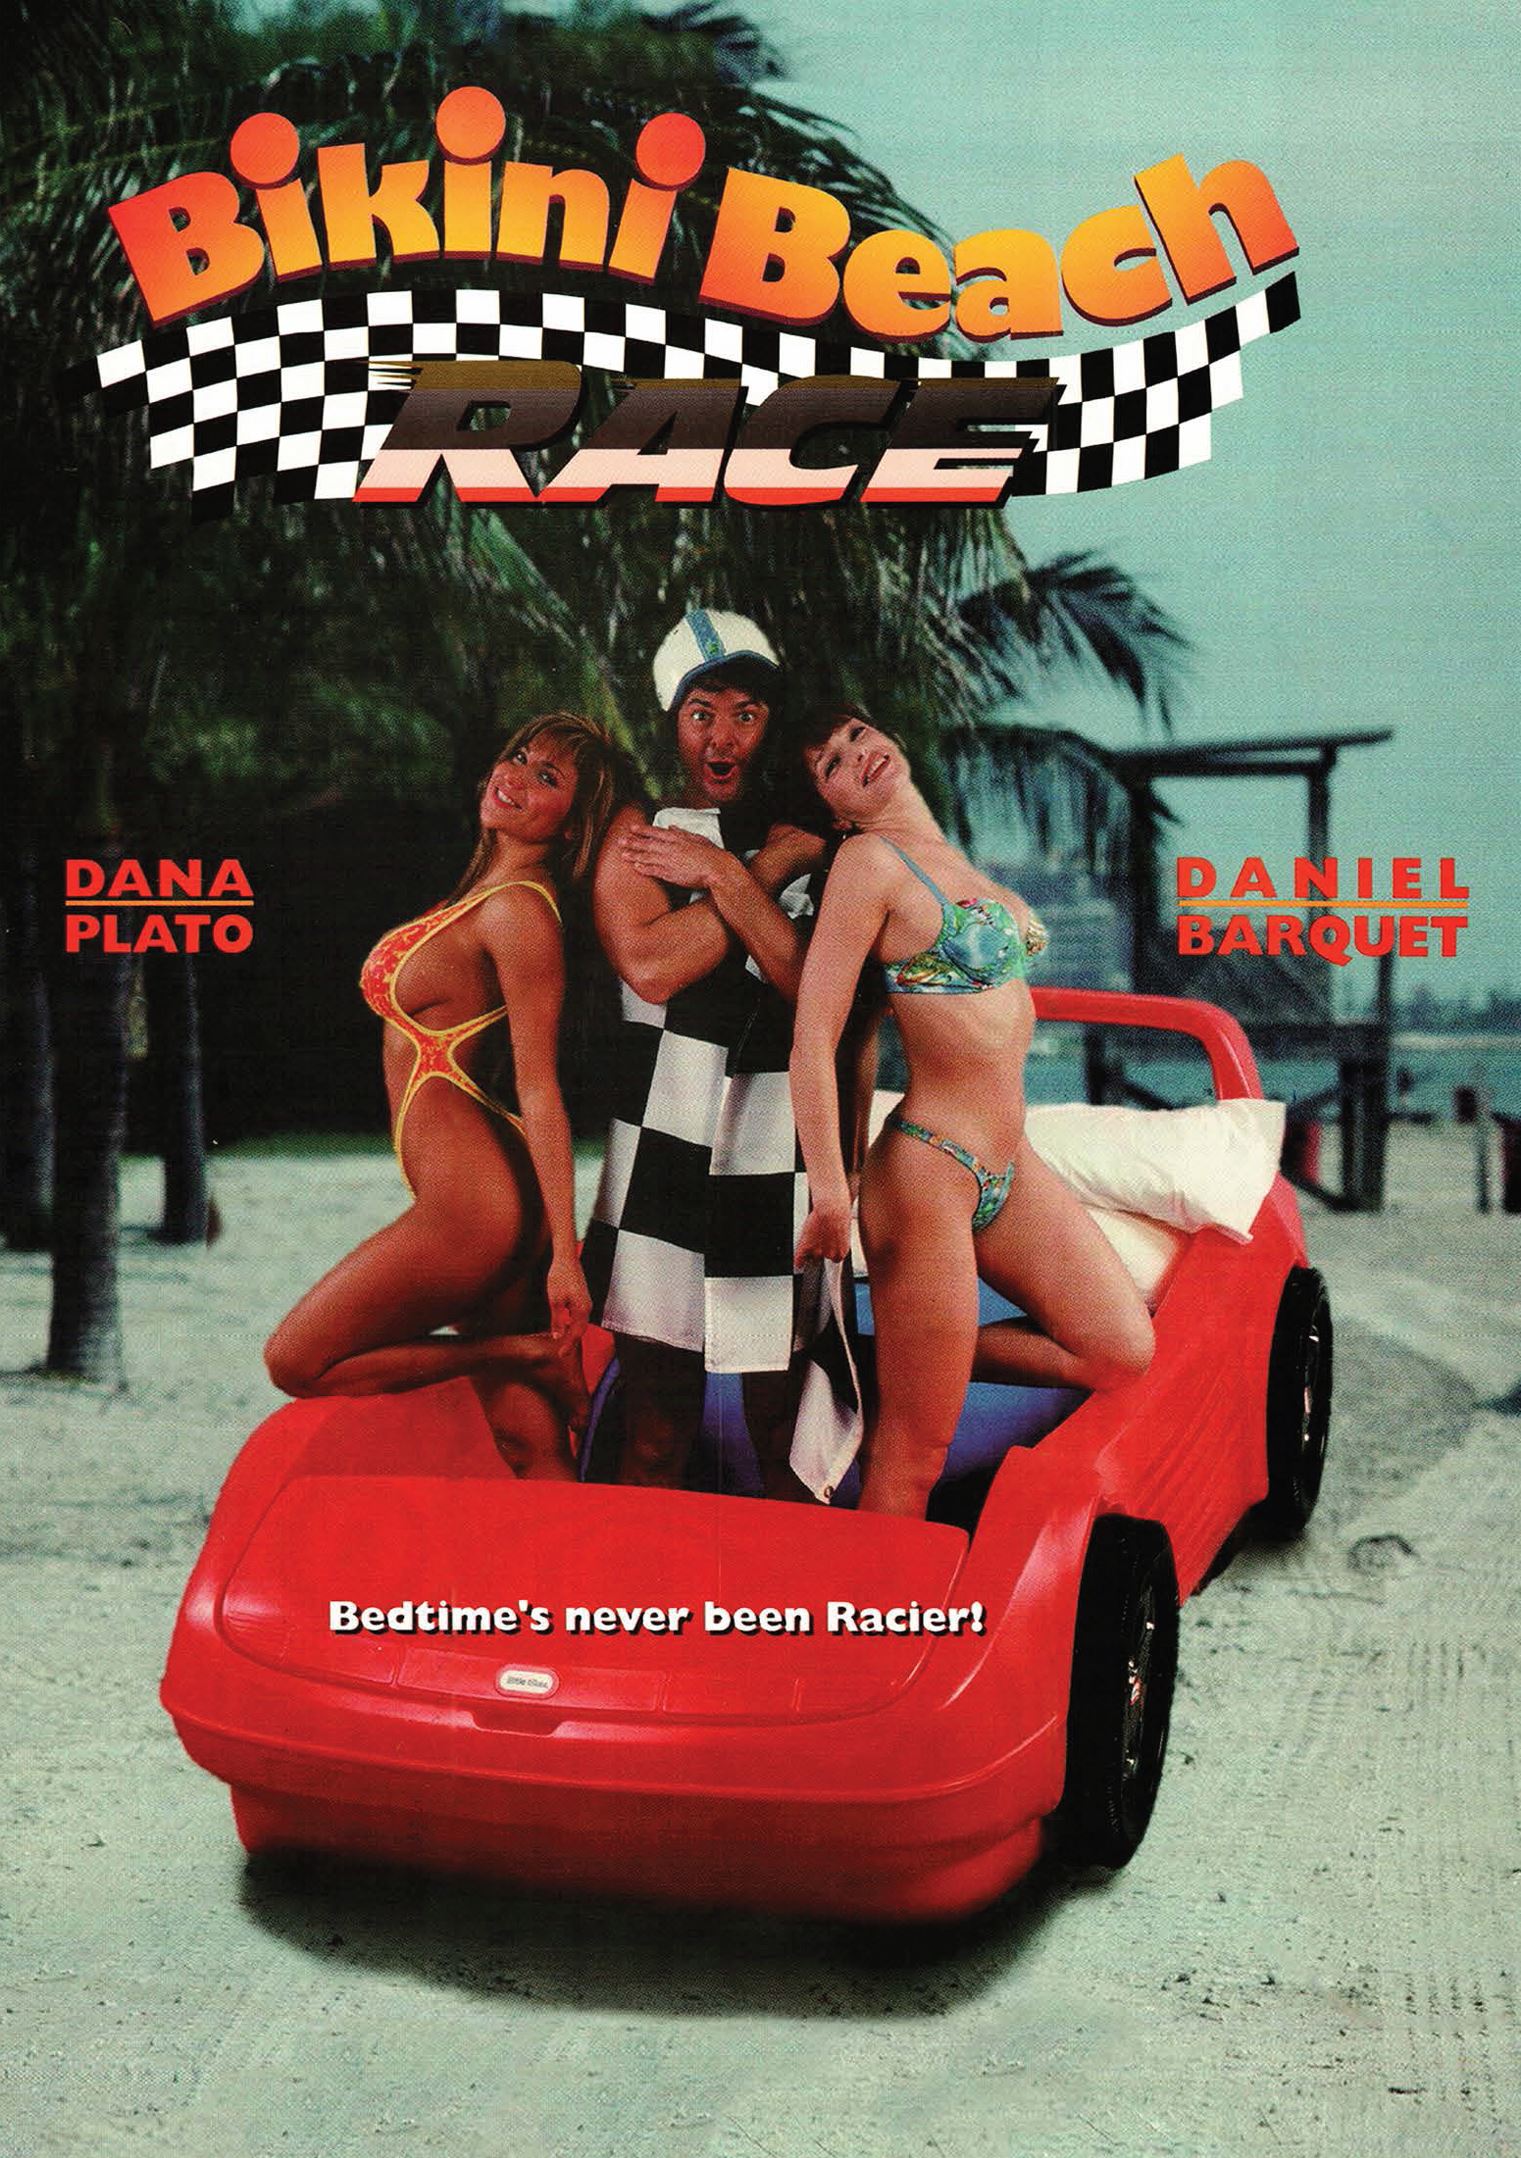 How Are Movies Made Porn - Best Buy: Bikini Beach Race [DVD] [1992]